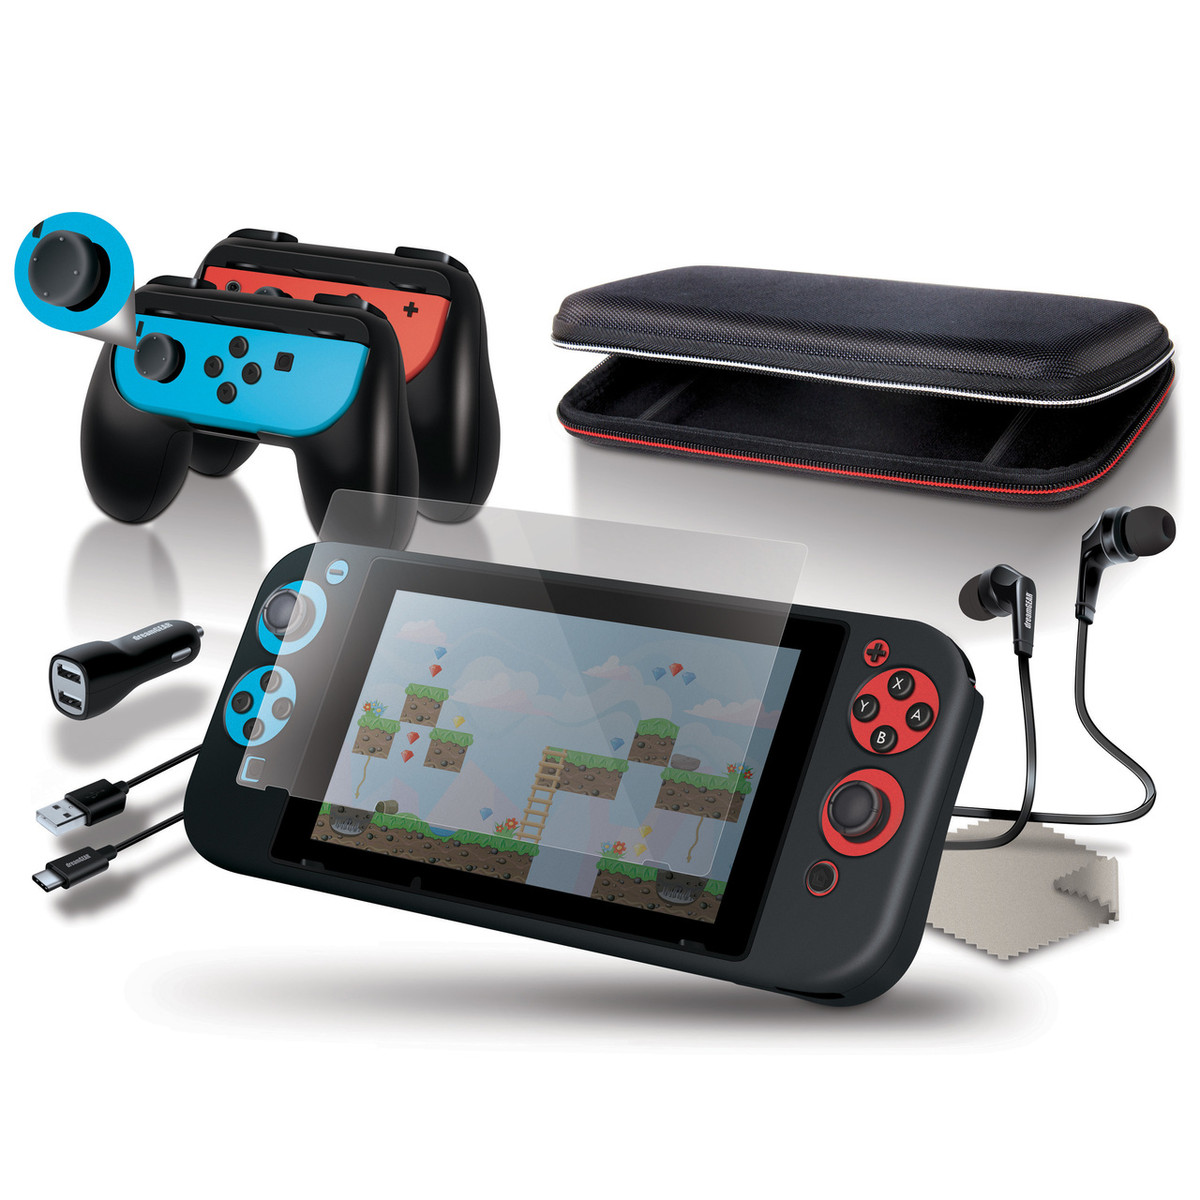 Starter Kit for Nintendo Switch® - dreamGEAR